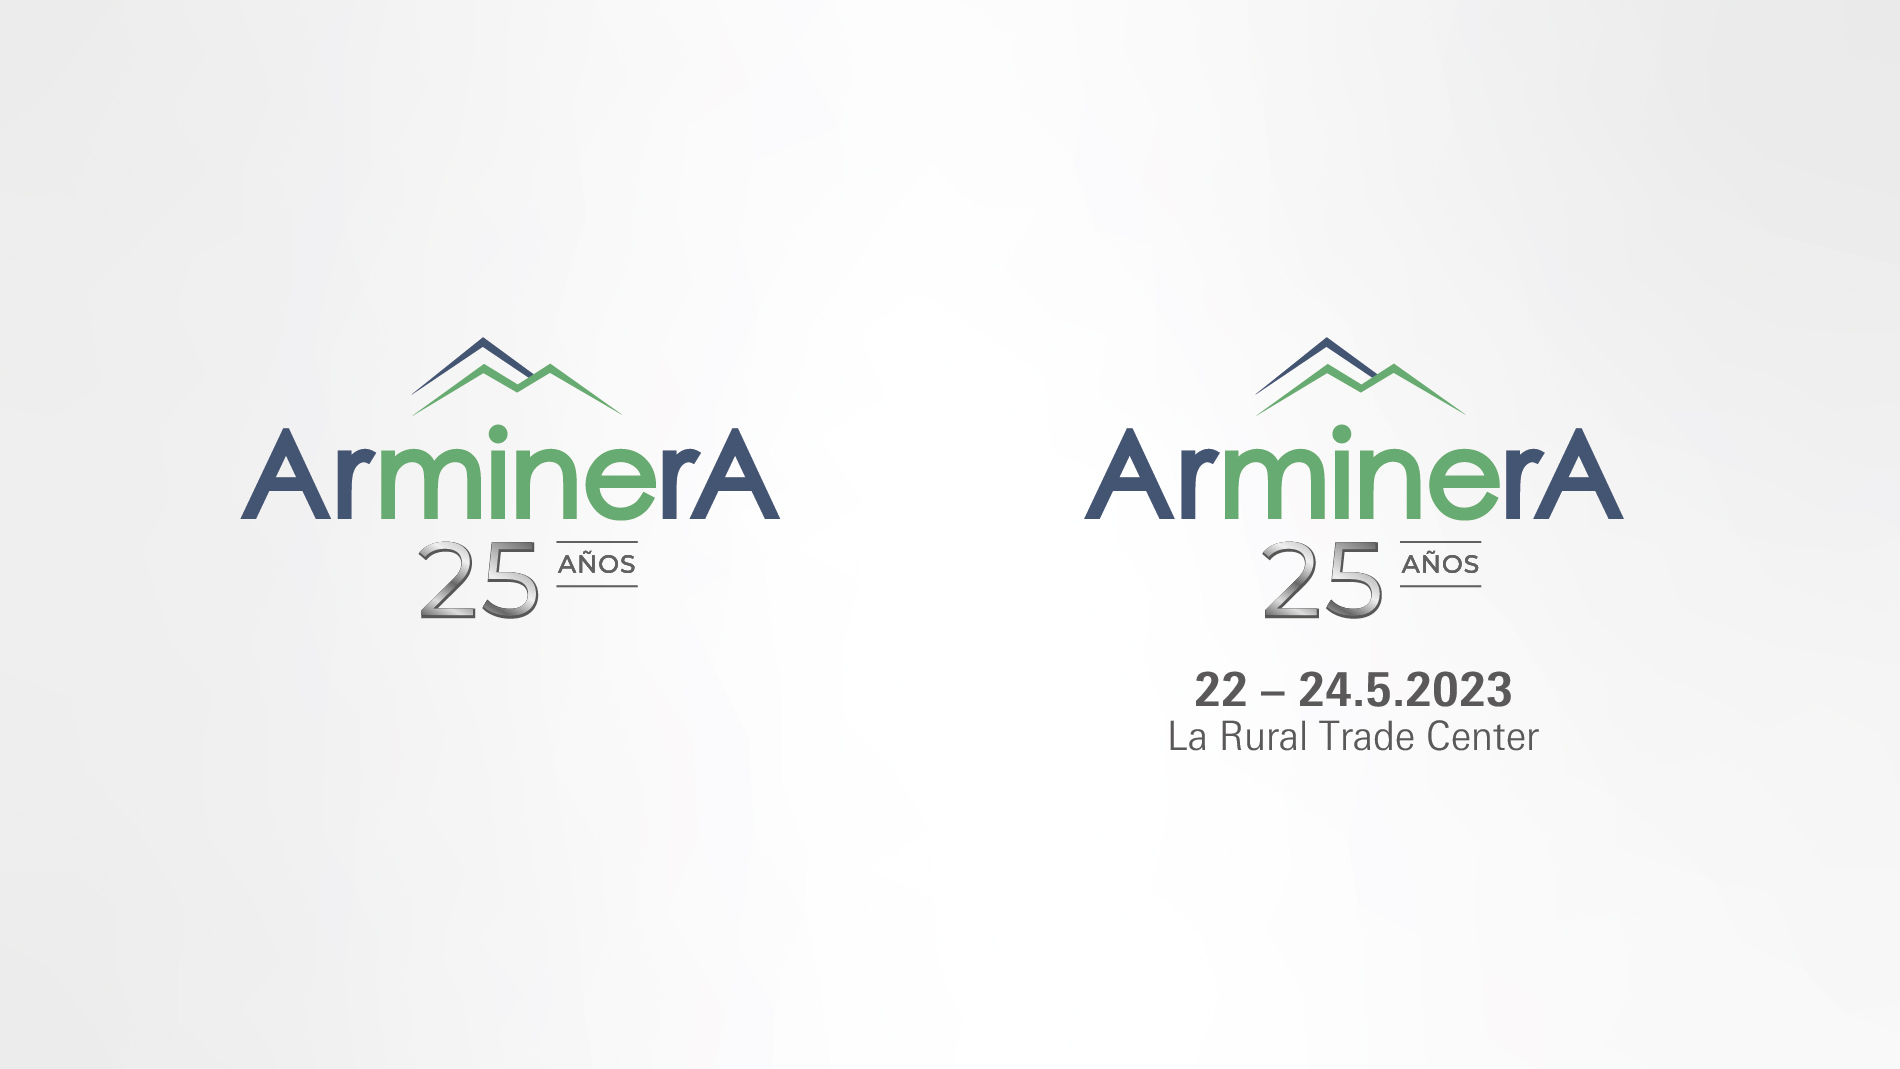 Arminera: Event logo